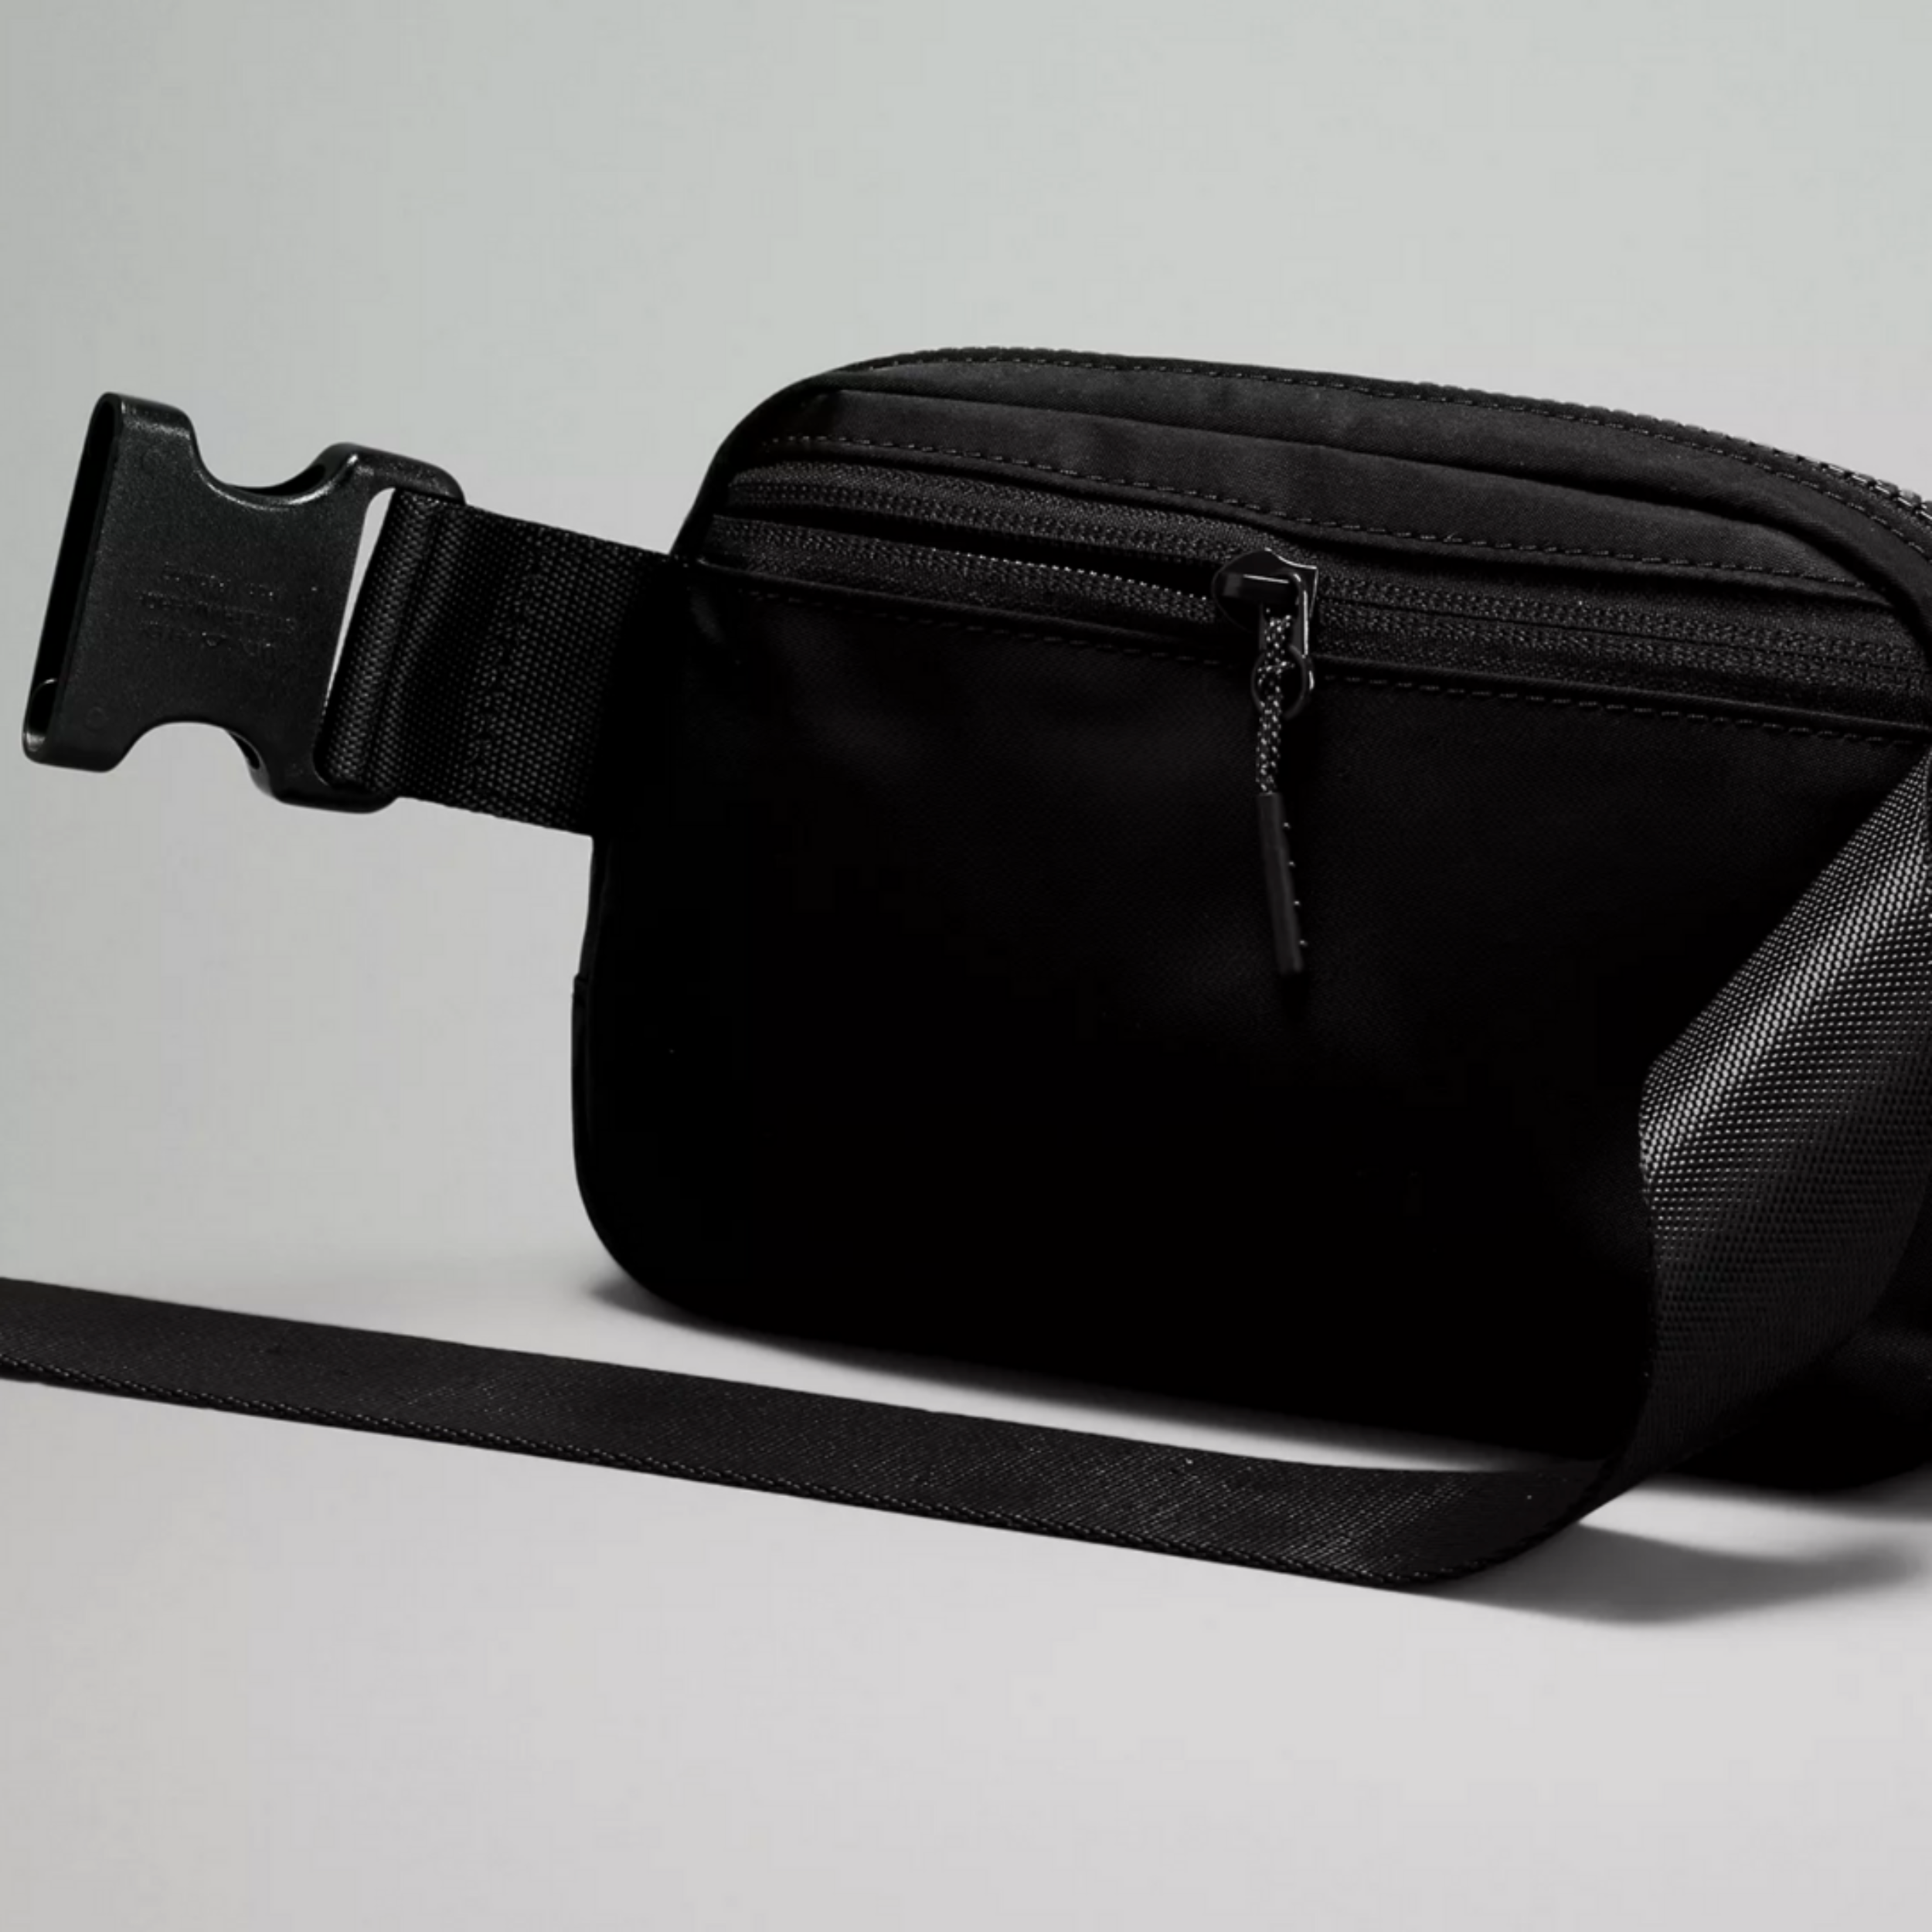 Essential Belt Bag in Black NEW!